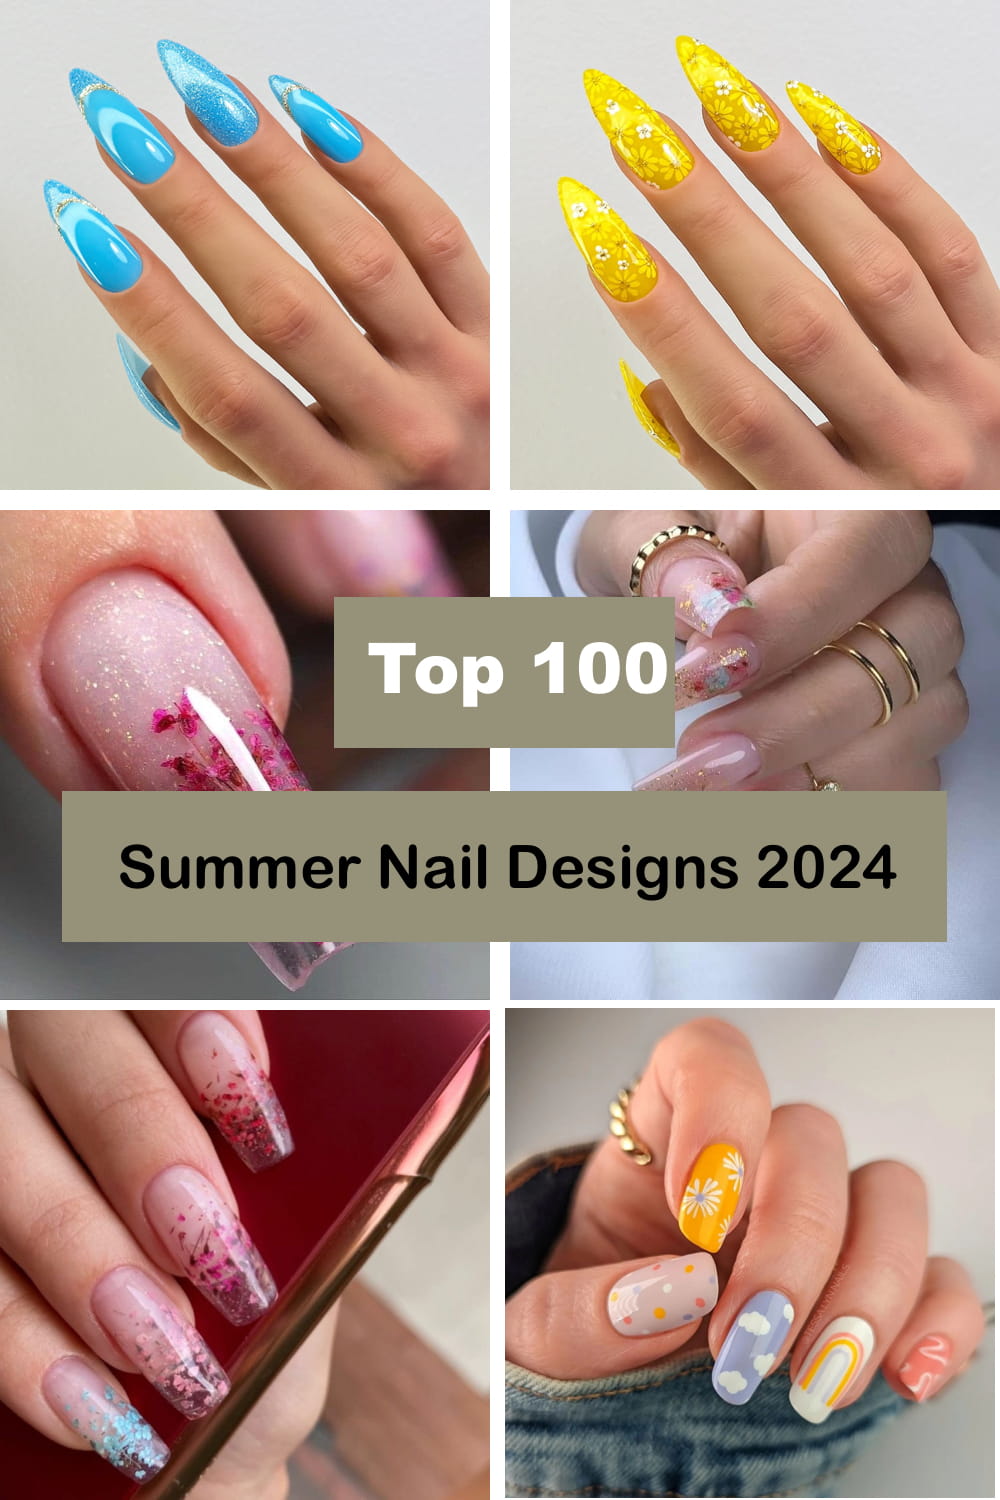 Top 100 Summer Nail Designs 2024 images